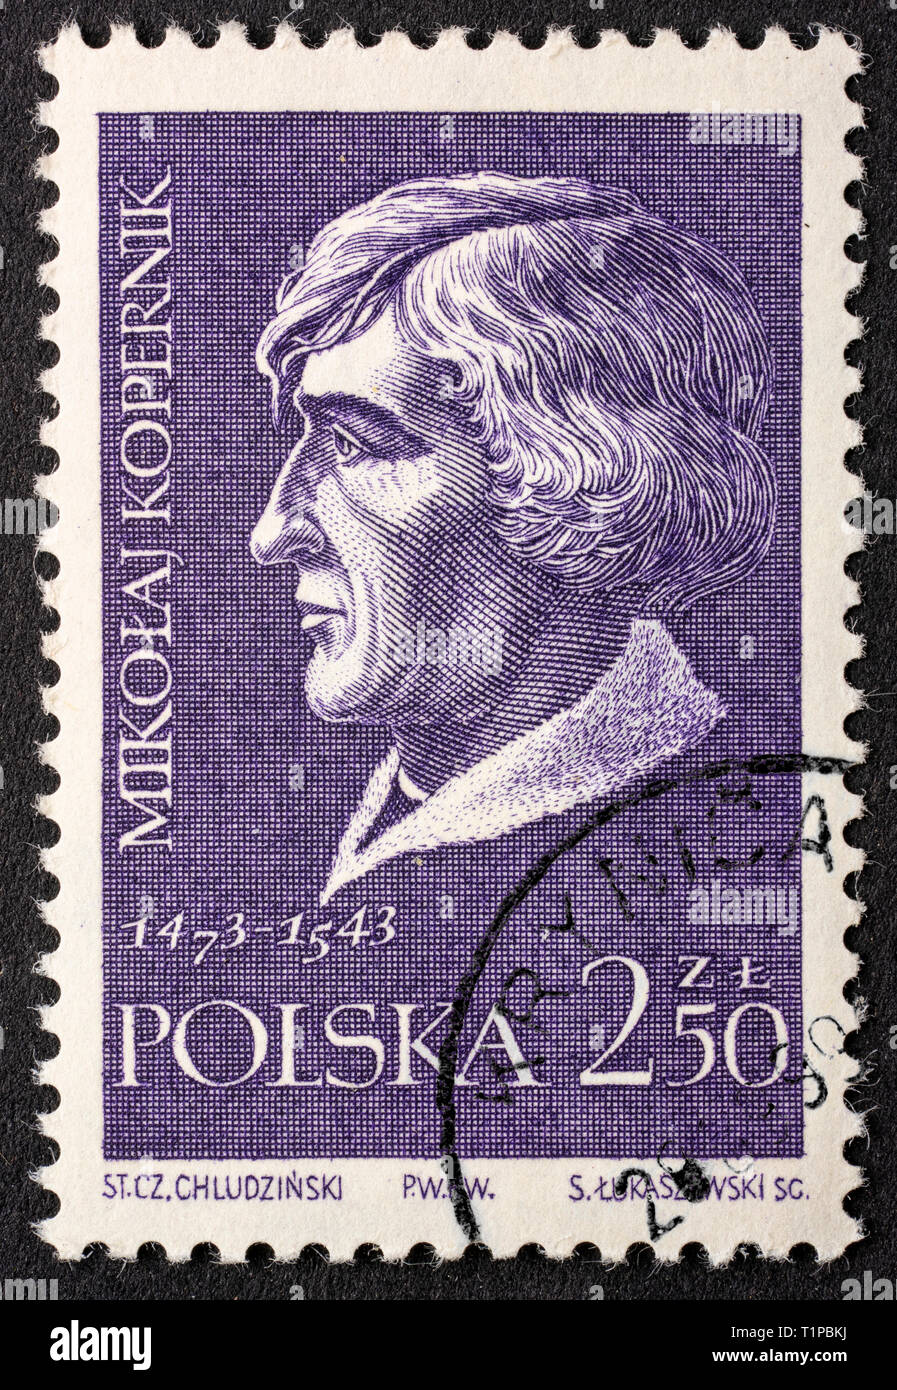 Nicolaus Copernicus (Mikołaj Kopernik), astronomer,  portrait on a vintage, canceled post stamp from Poland (circa 1959). Stock Photo